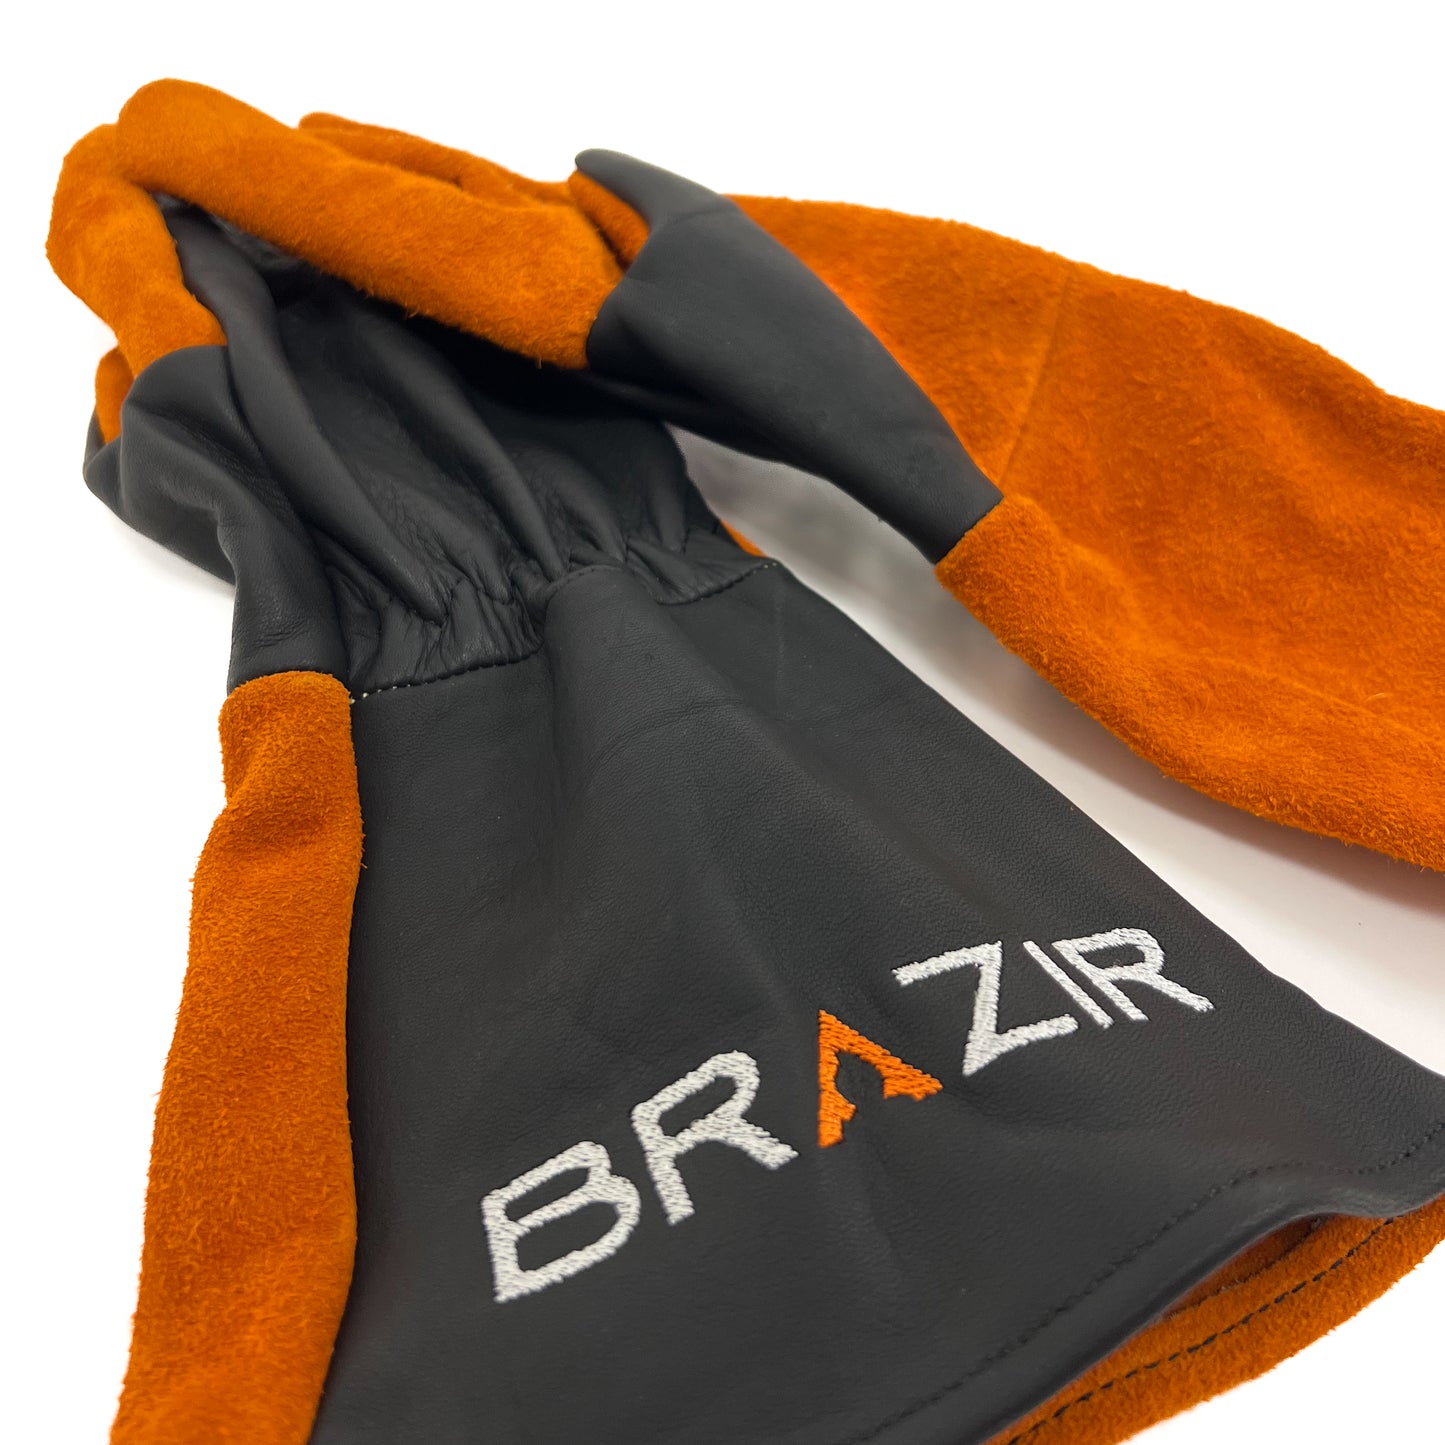 Gants en cuir Brazir Thermorésistant pour Brasero Plancha Barbecue Anti Feu/Chaleur